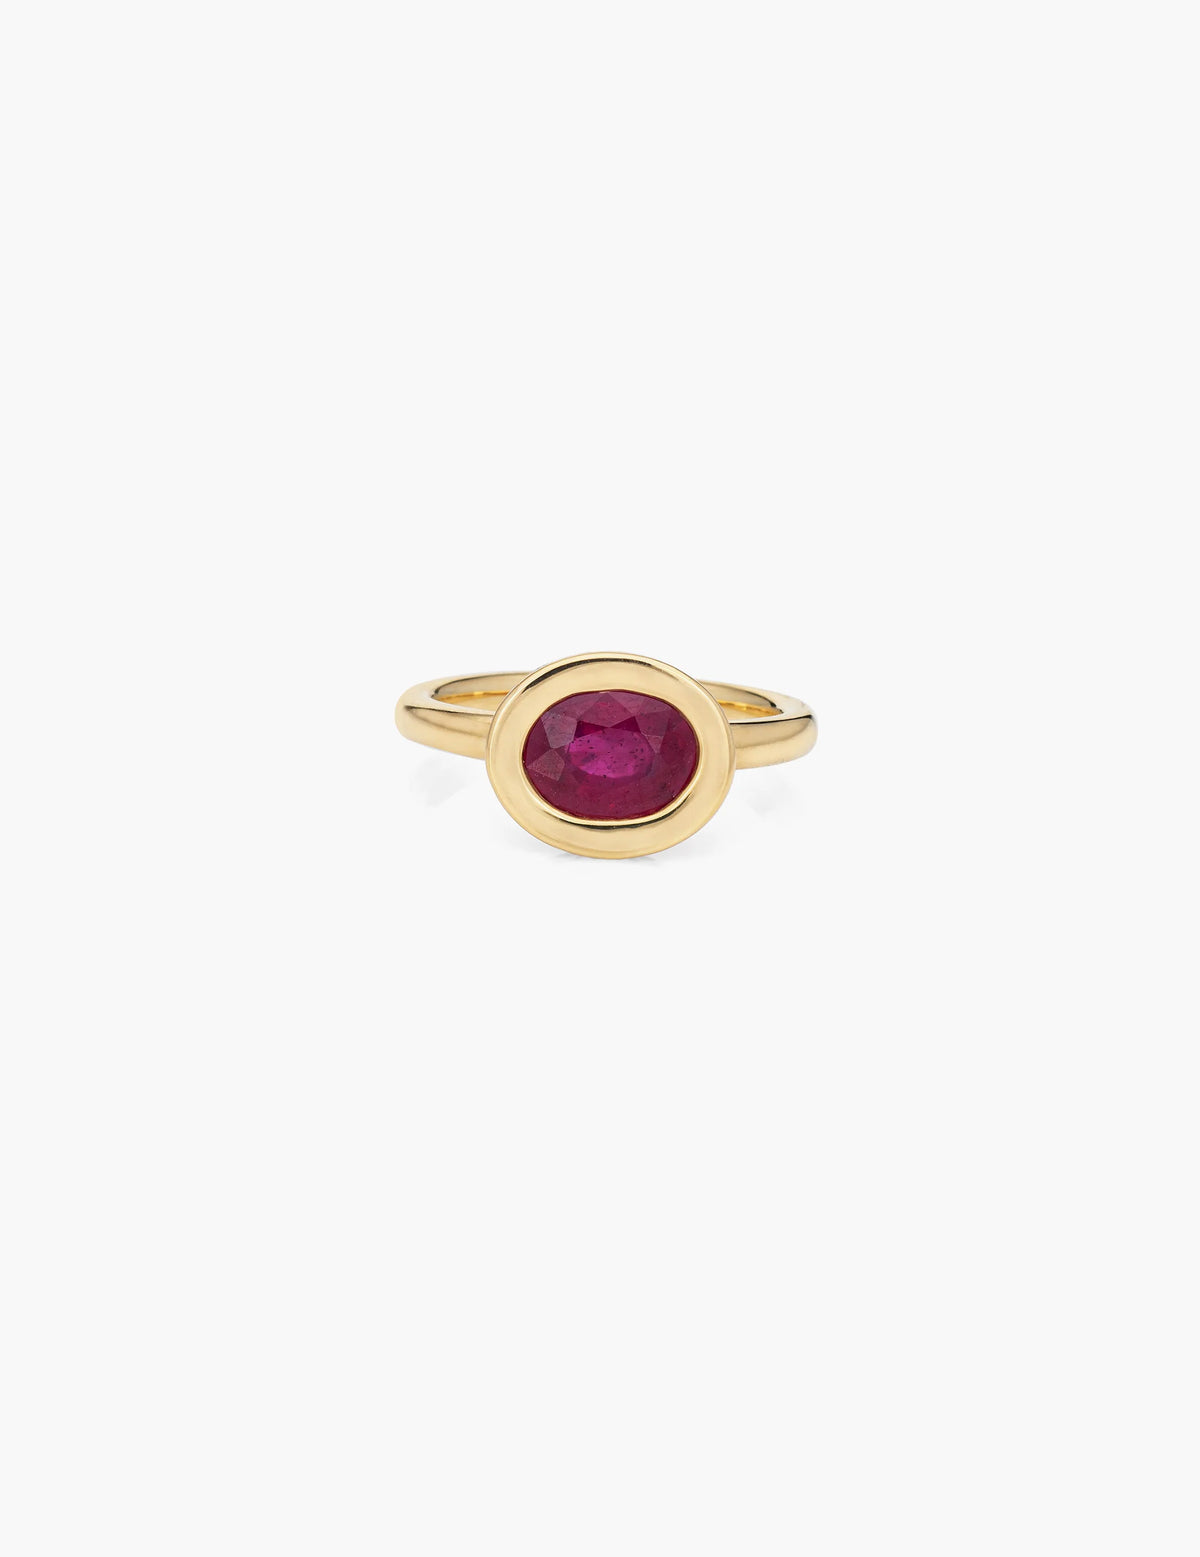 Ruby Art Deco Enamel Ring